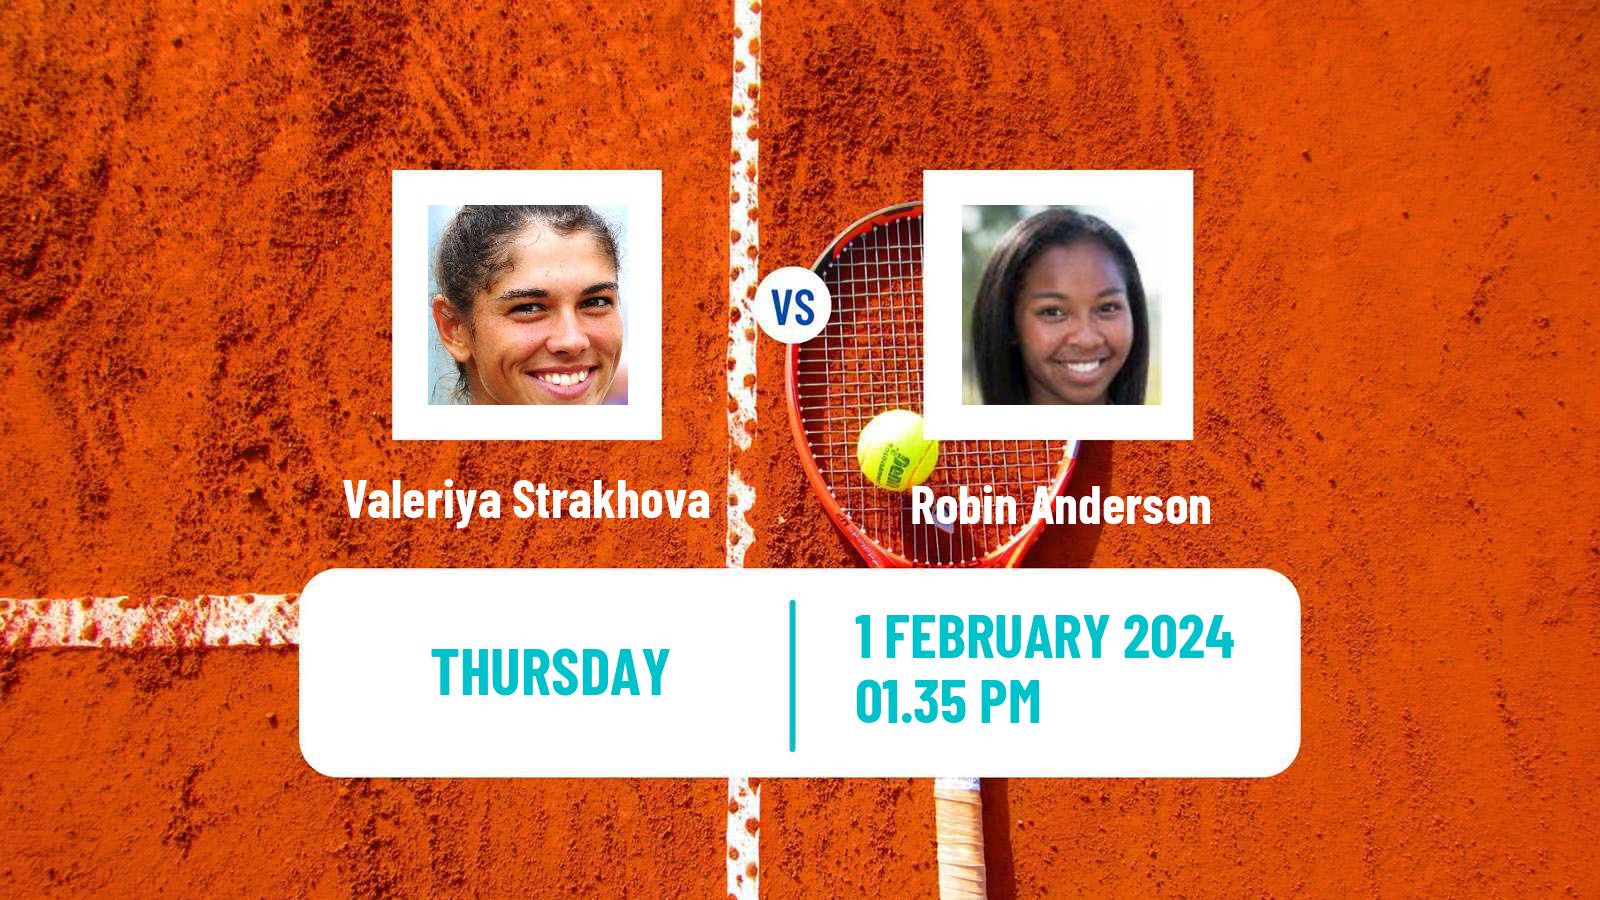 Tennis ITF W75 Rome Ga Women Valeriya Strakhova - Robin Anderson